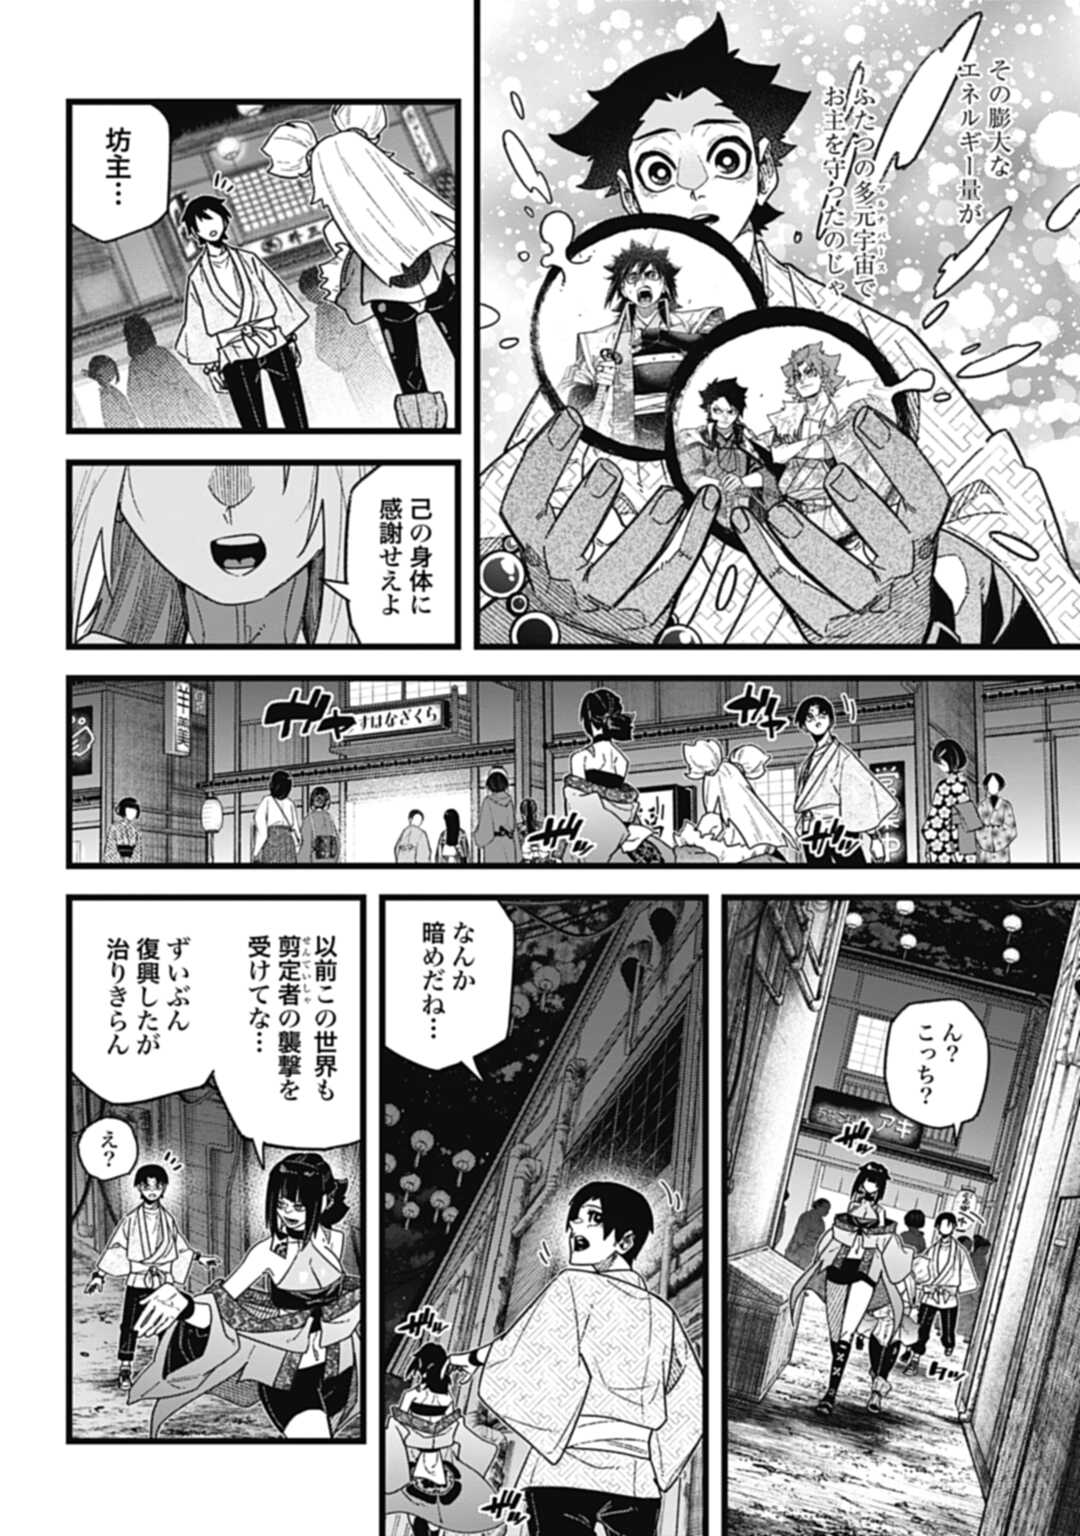 Nobunaga Multiverse - Chapter 8.1 - Page 10